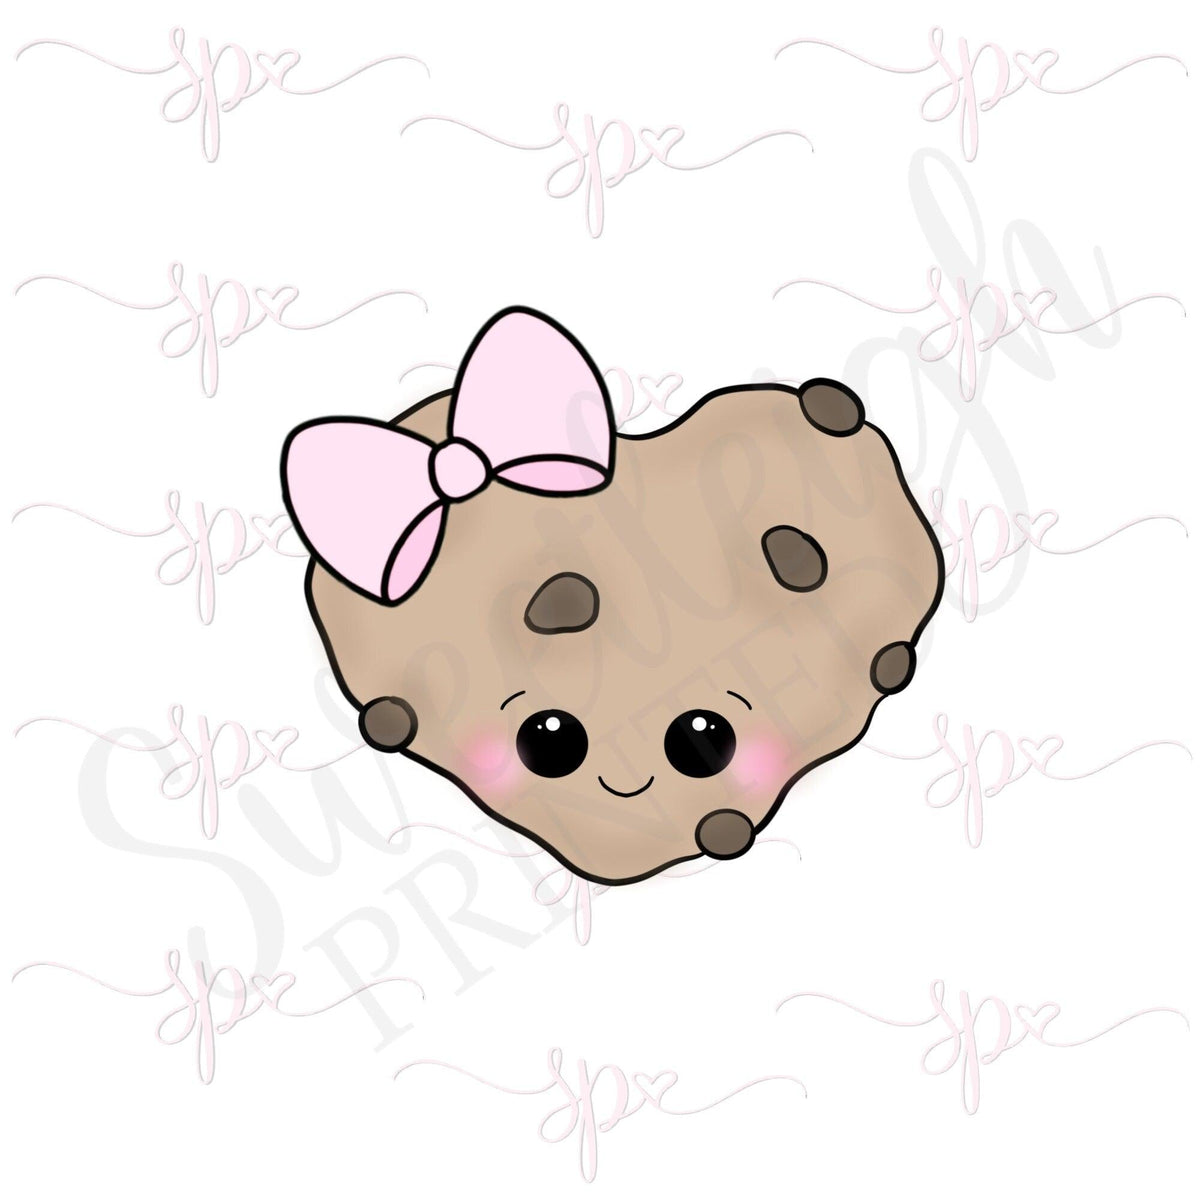 Girly Kawaii Cookie Heart Cookie Cutter - Sweetleigh 